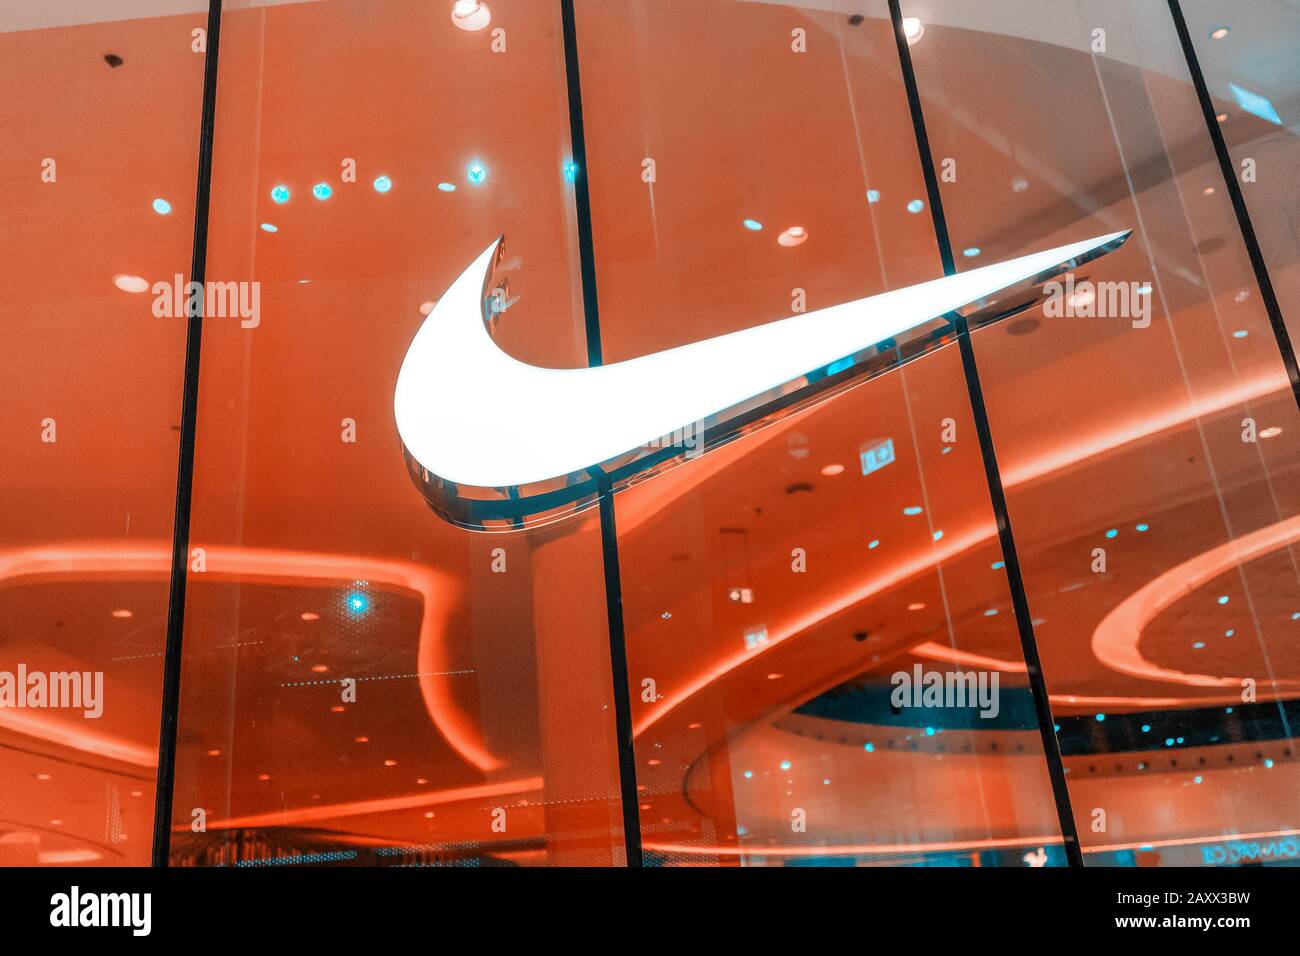 Nike Logo Stock Illustrations – 615 Nike Logo Stock Illustrations, Vectors  & Clipart - Dreamstime